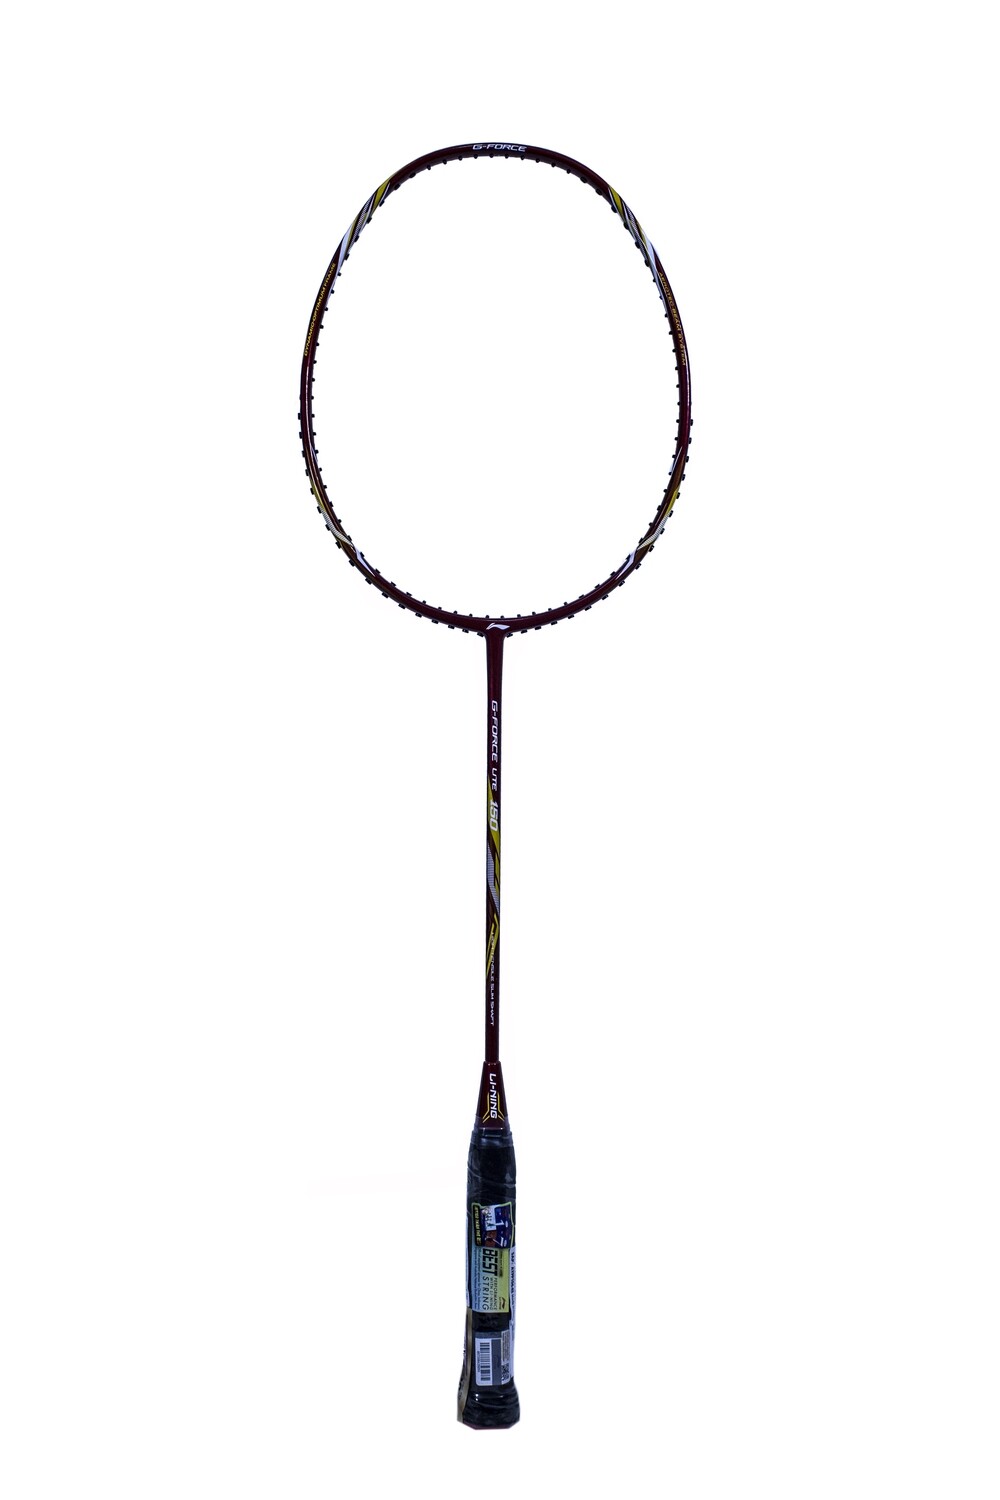 LI-NING G-Force Lite 150 Badminton Racquet -